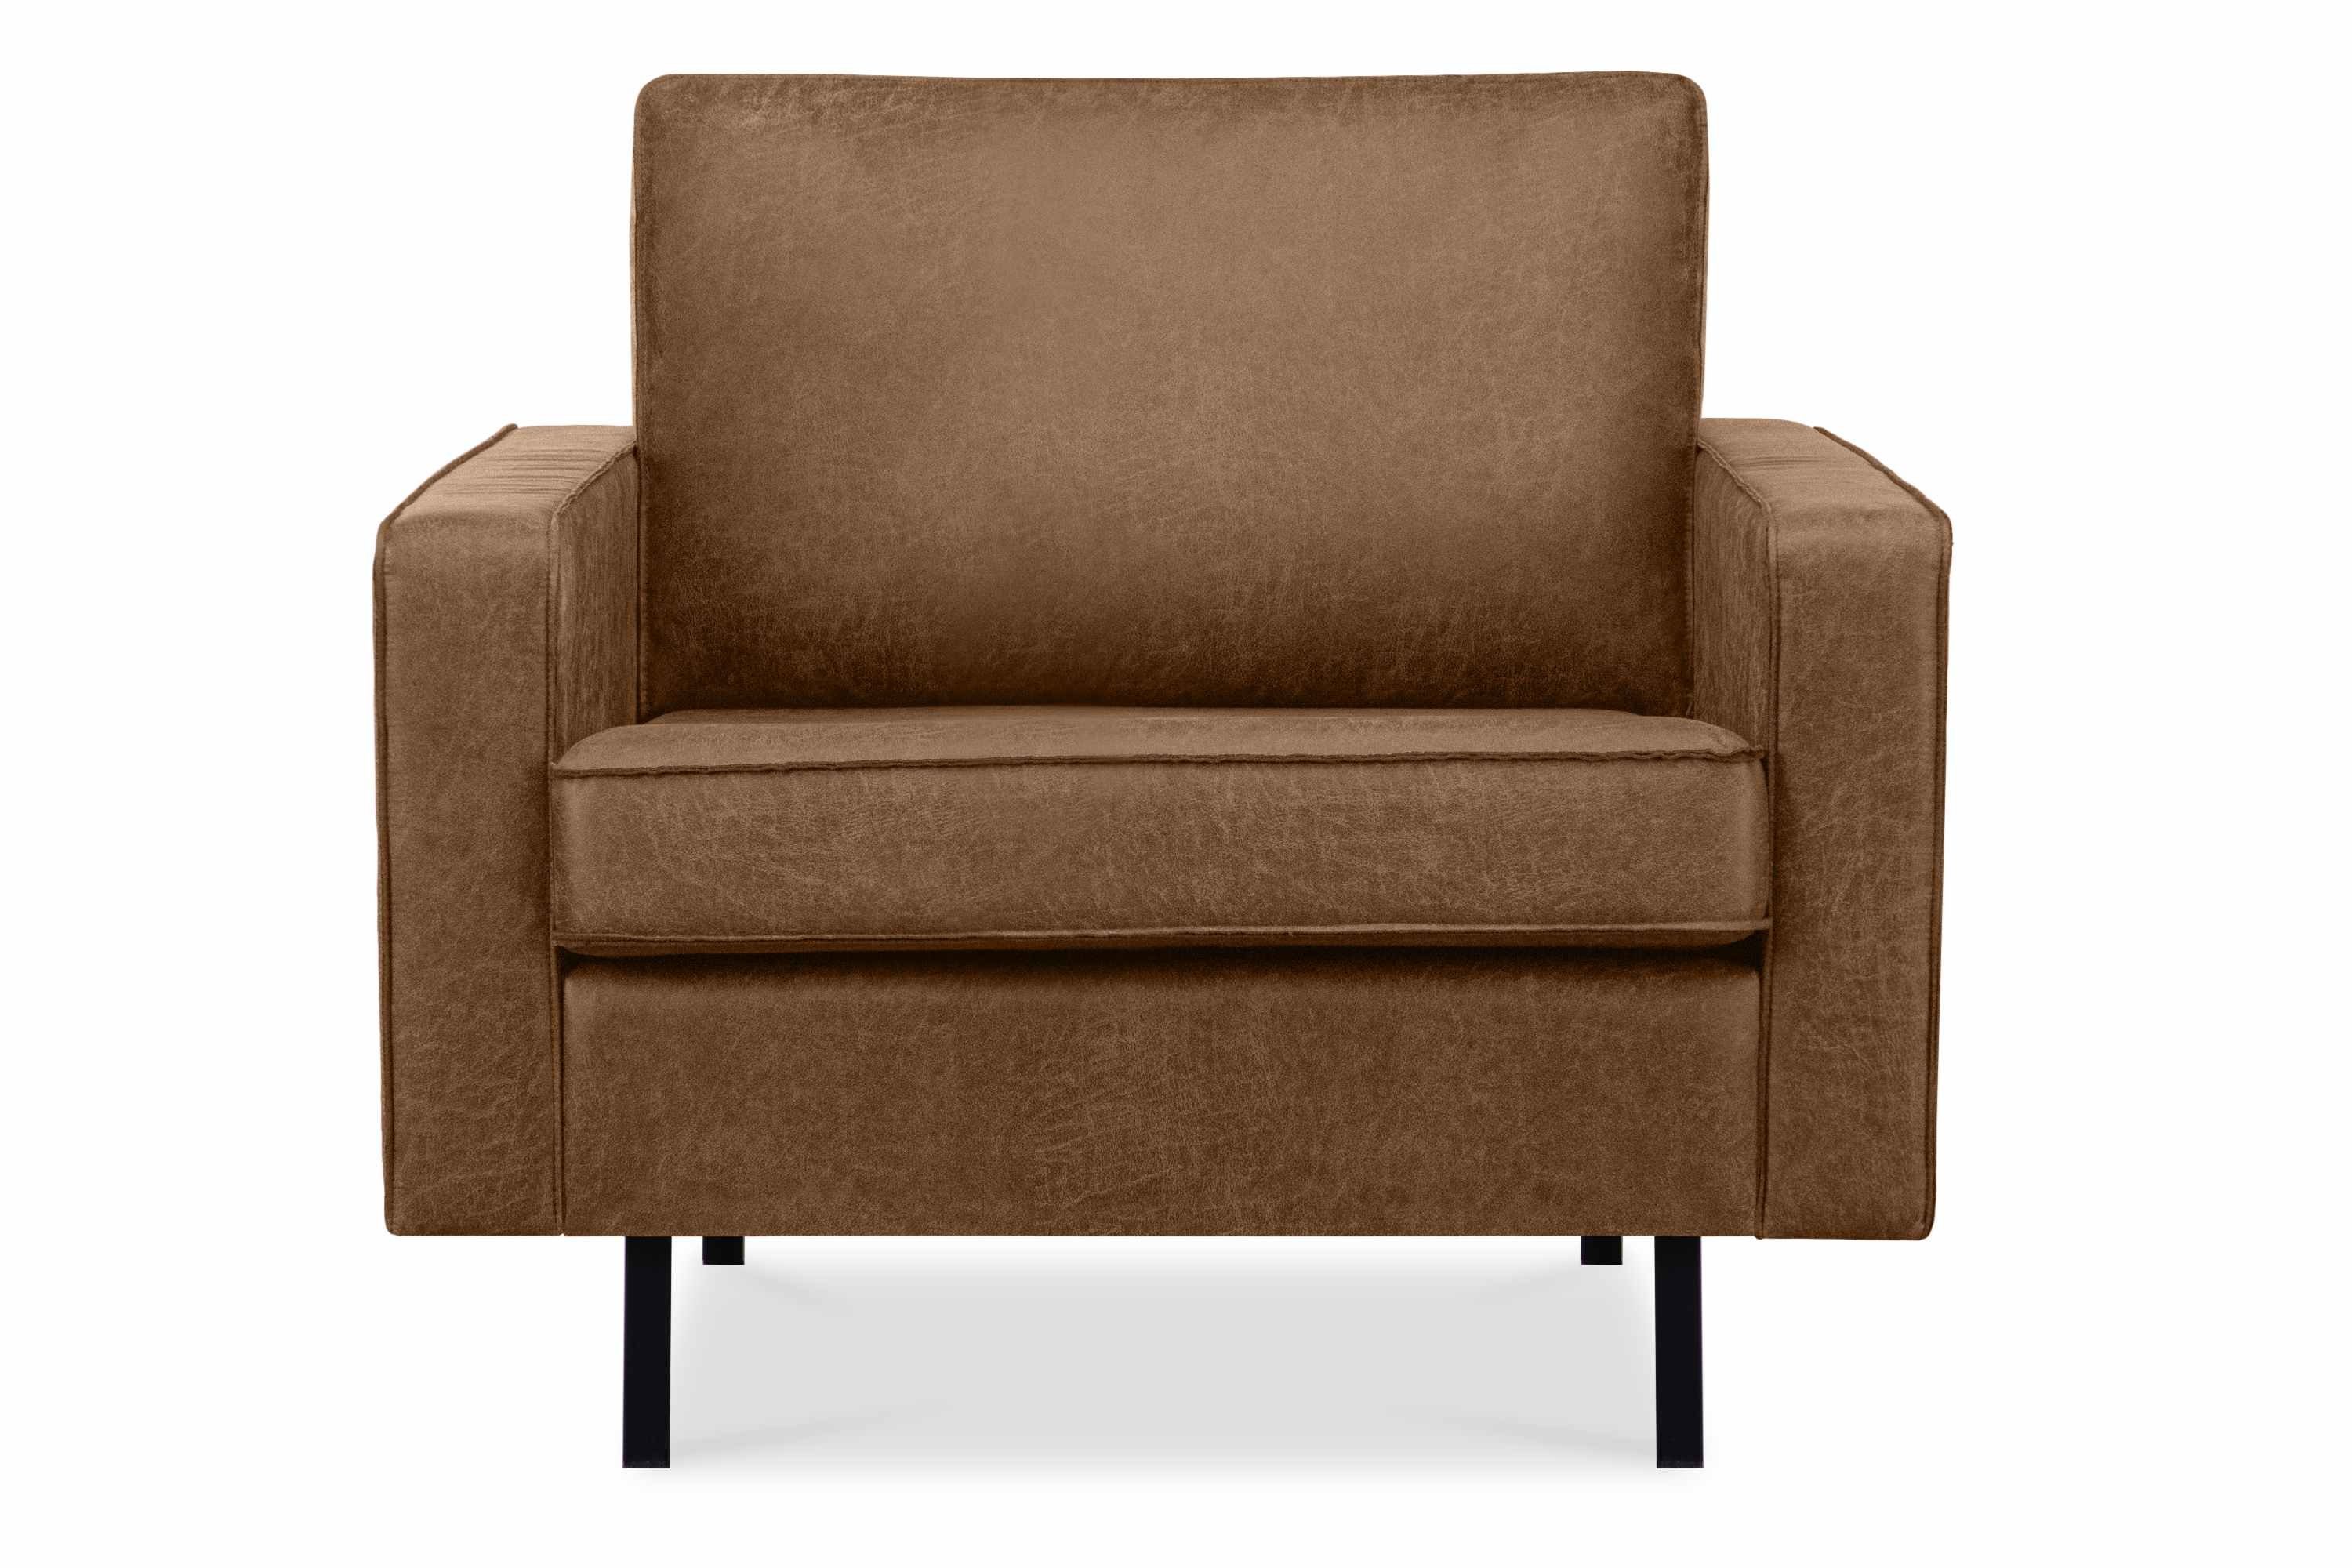 Konsimo Sessel INVIA Sessel, Grundschicht: Echtleder, Hergestellt in EU, Vintage, Loft-Stil braun | braun | braun